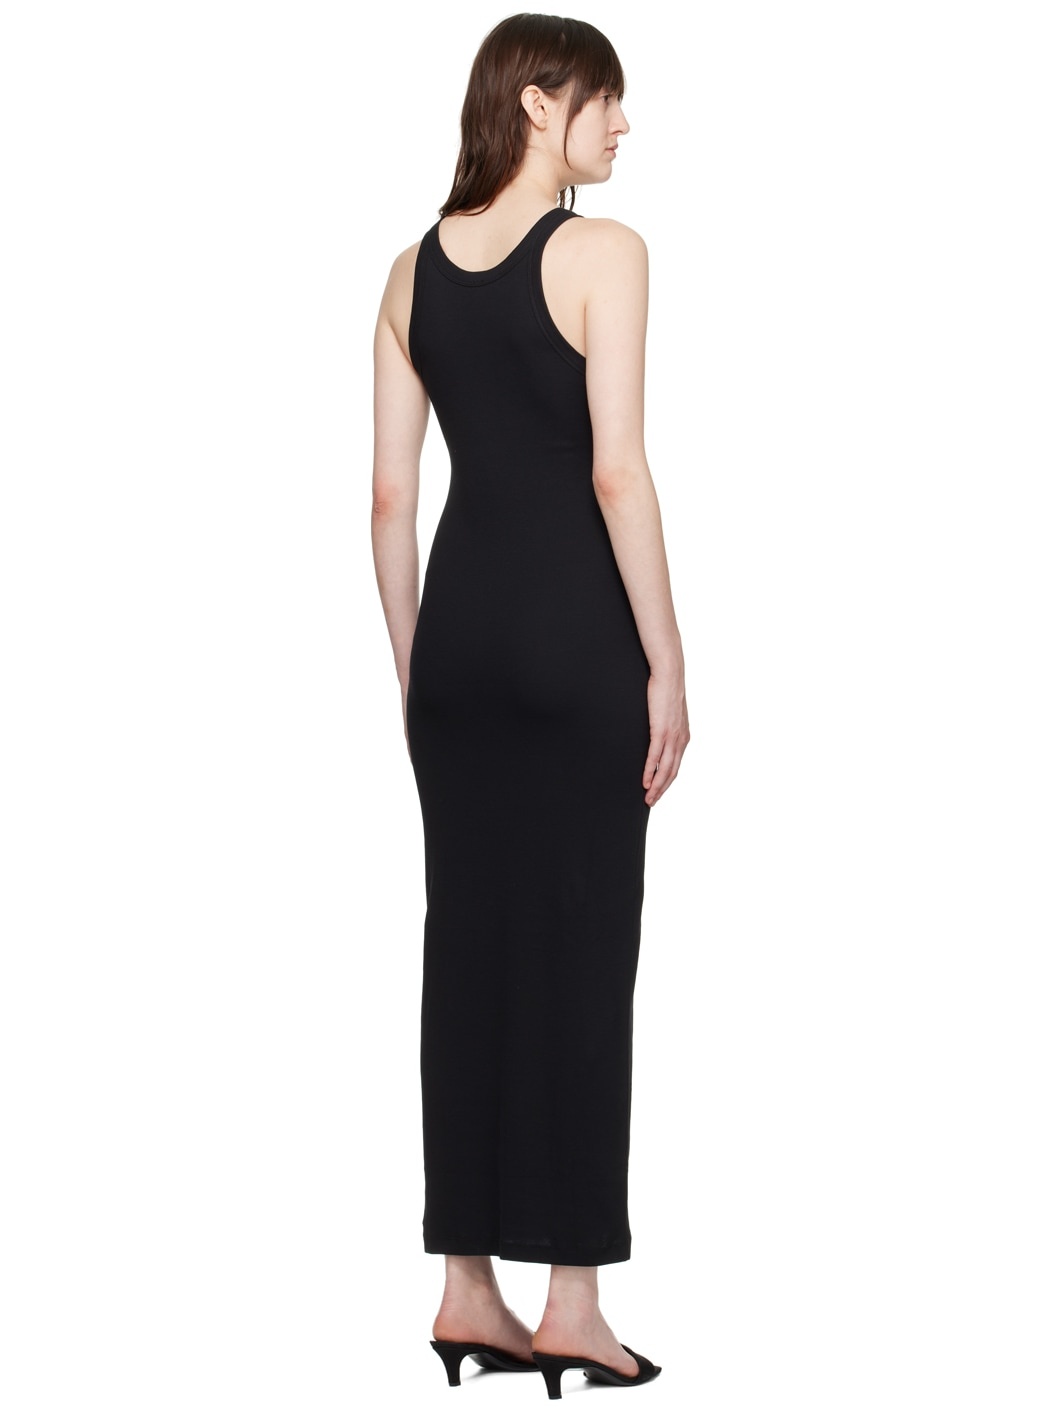 Black Curved Maxi Dress - 3